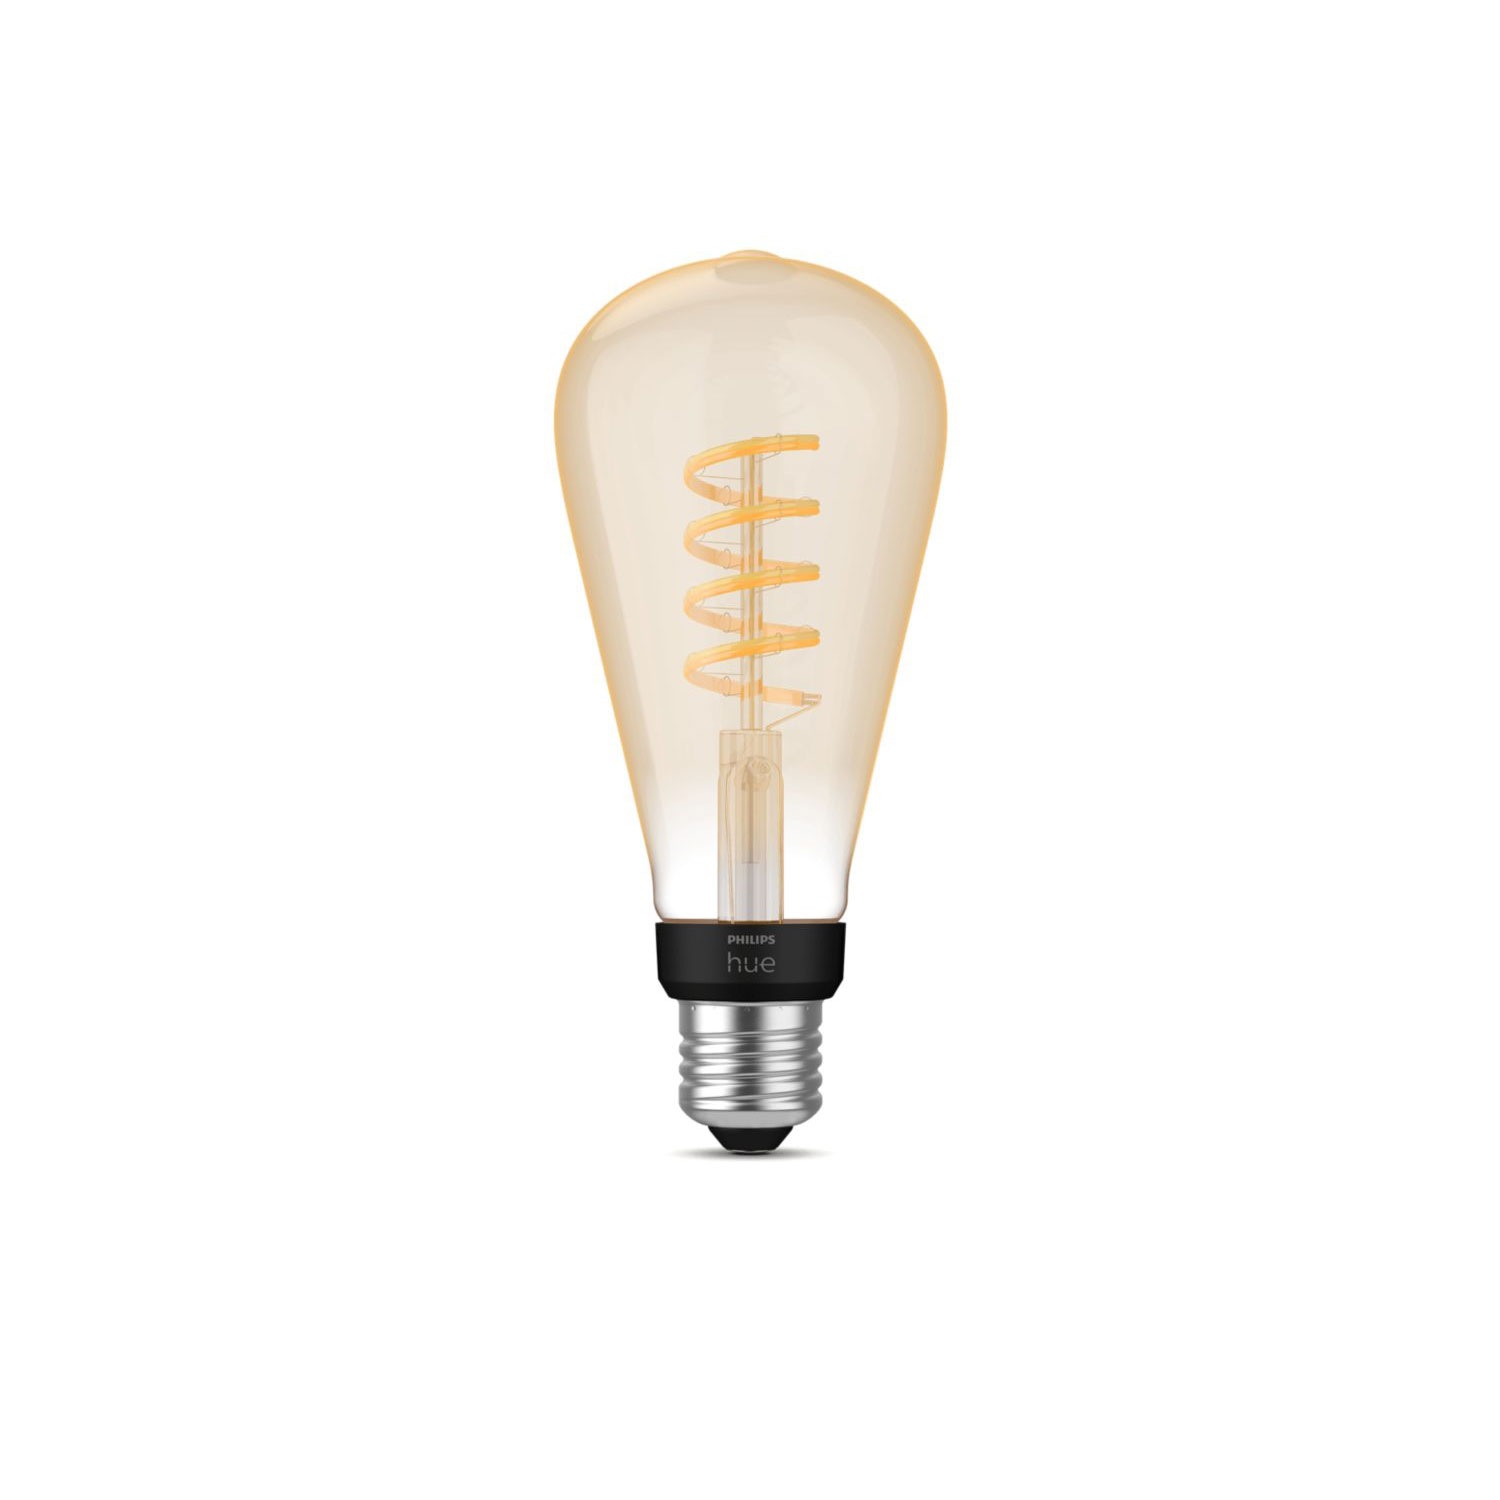 Philips Hue Smarte LED-Leuchte »White Ambiance«